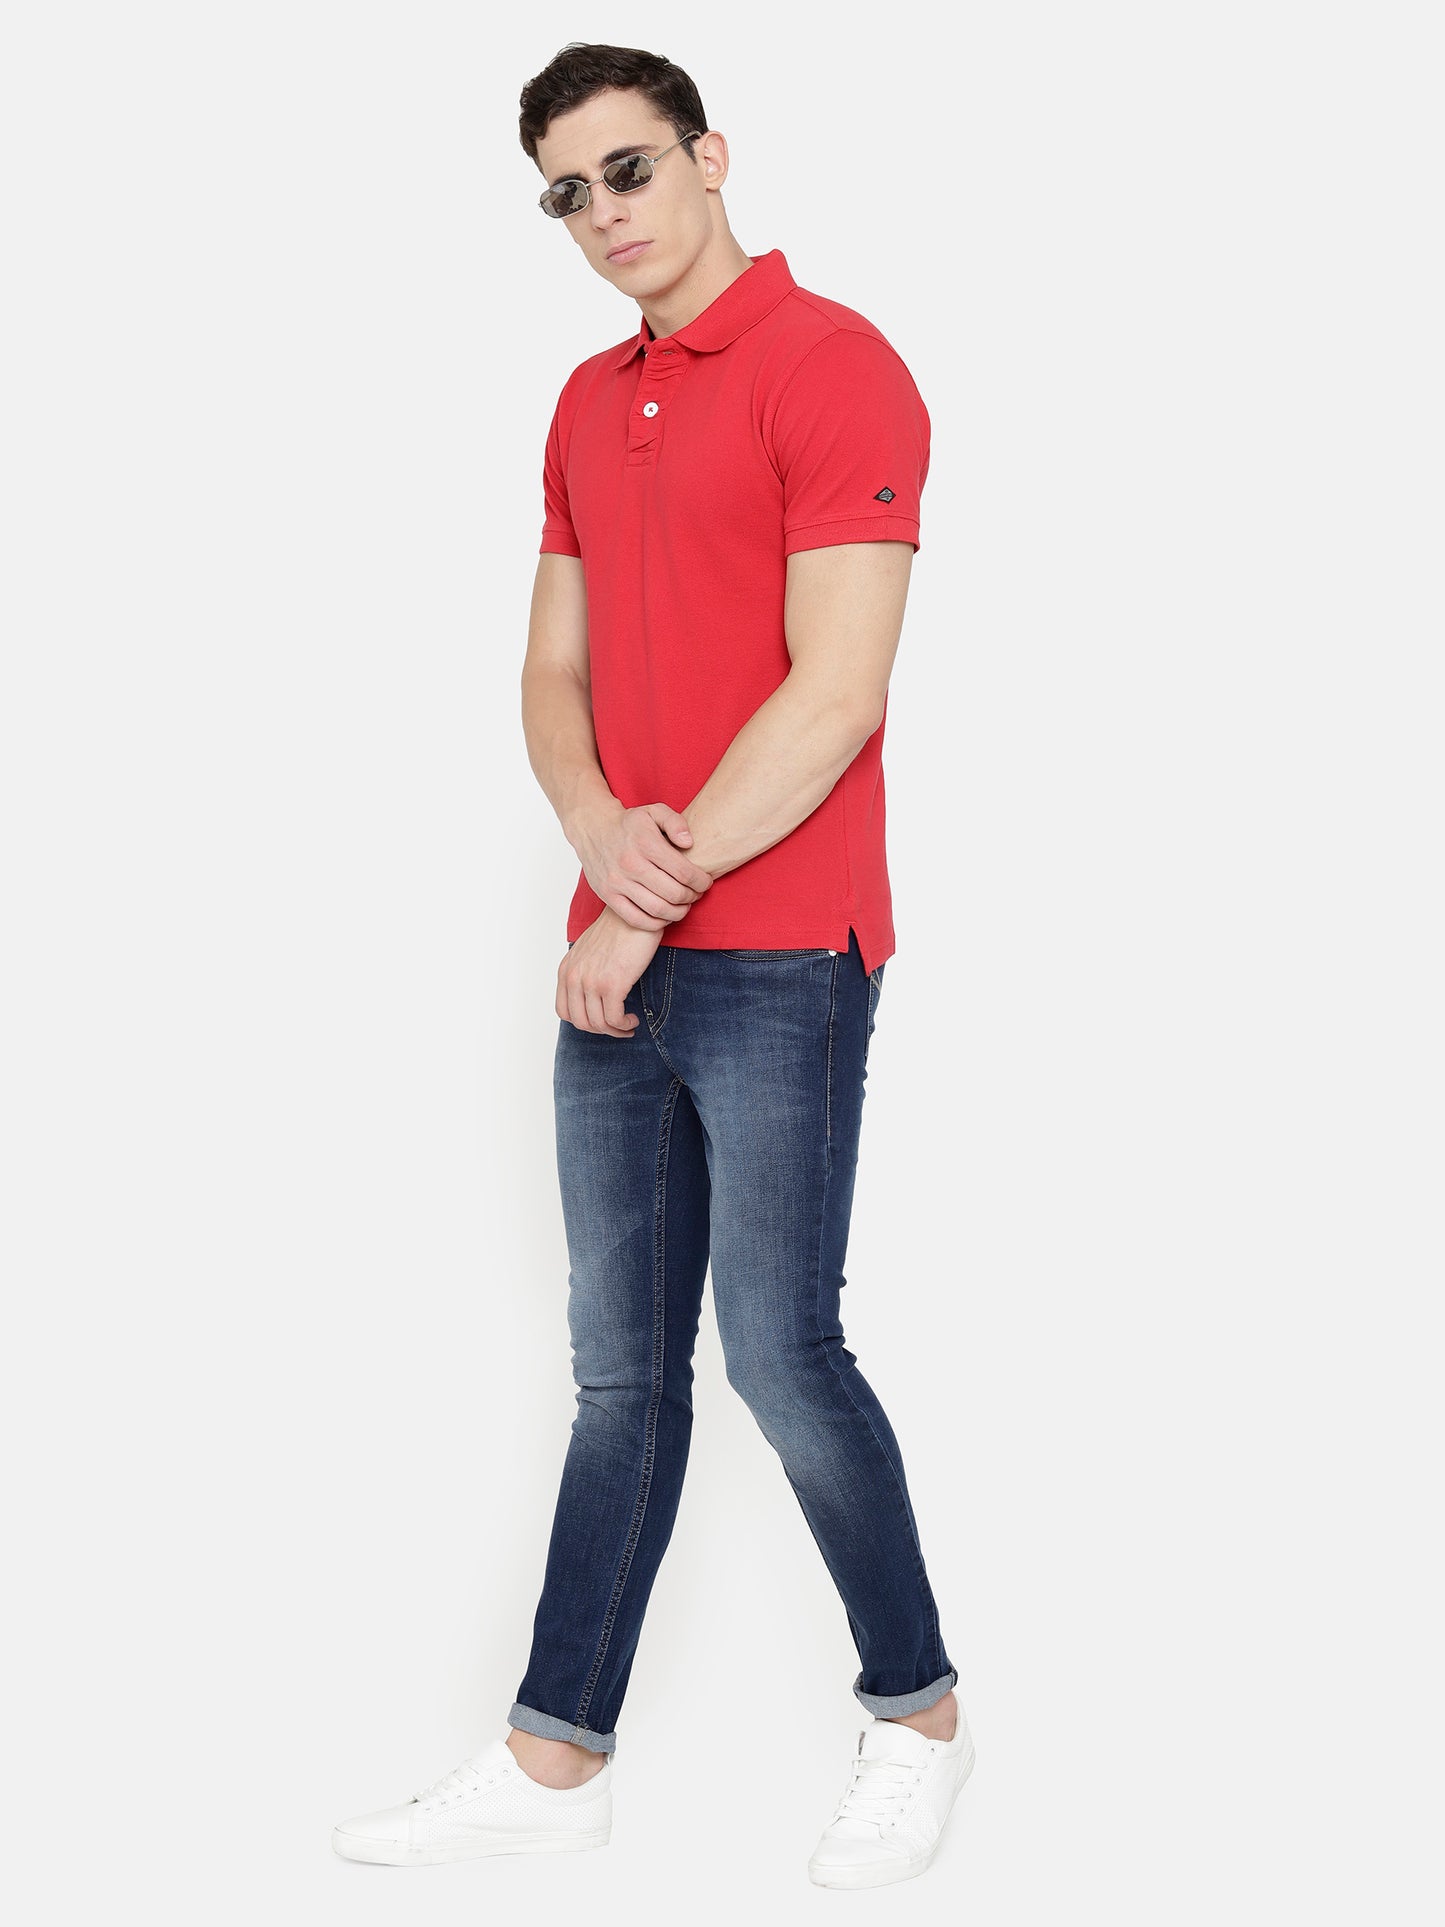 Red Polo T-Shirt pique